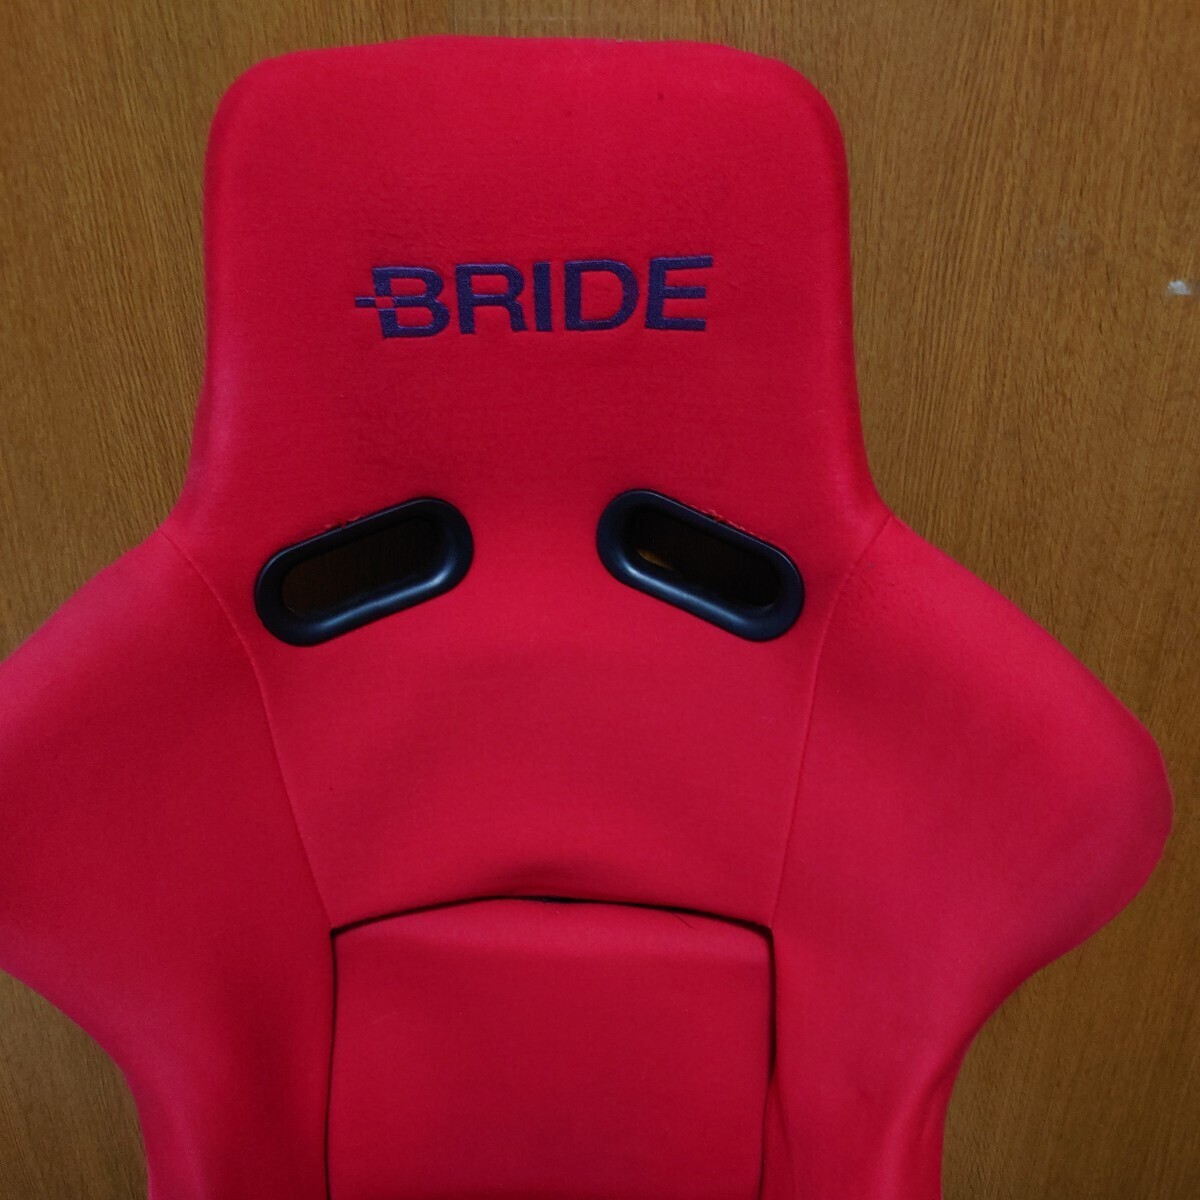 BRIDE bride full backet red 